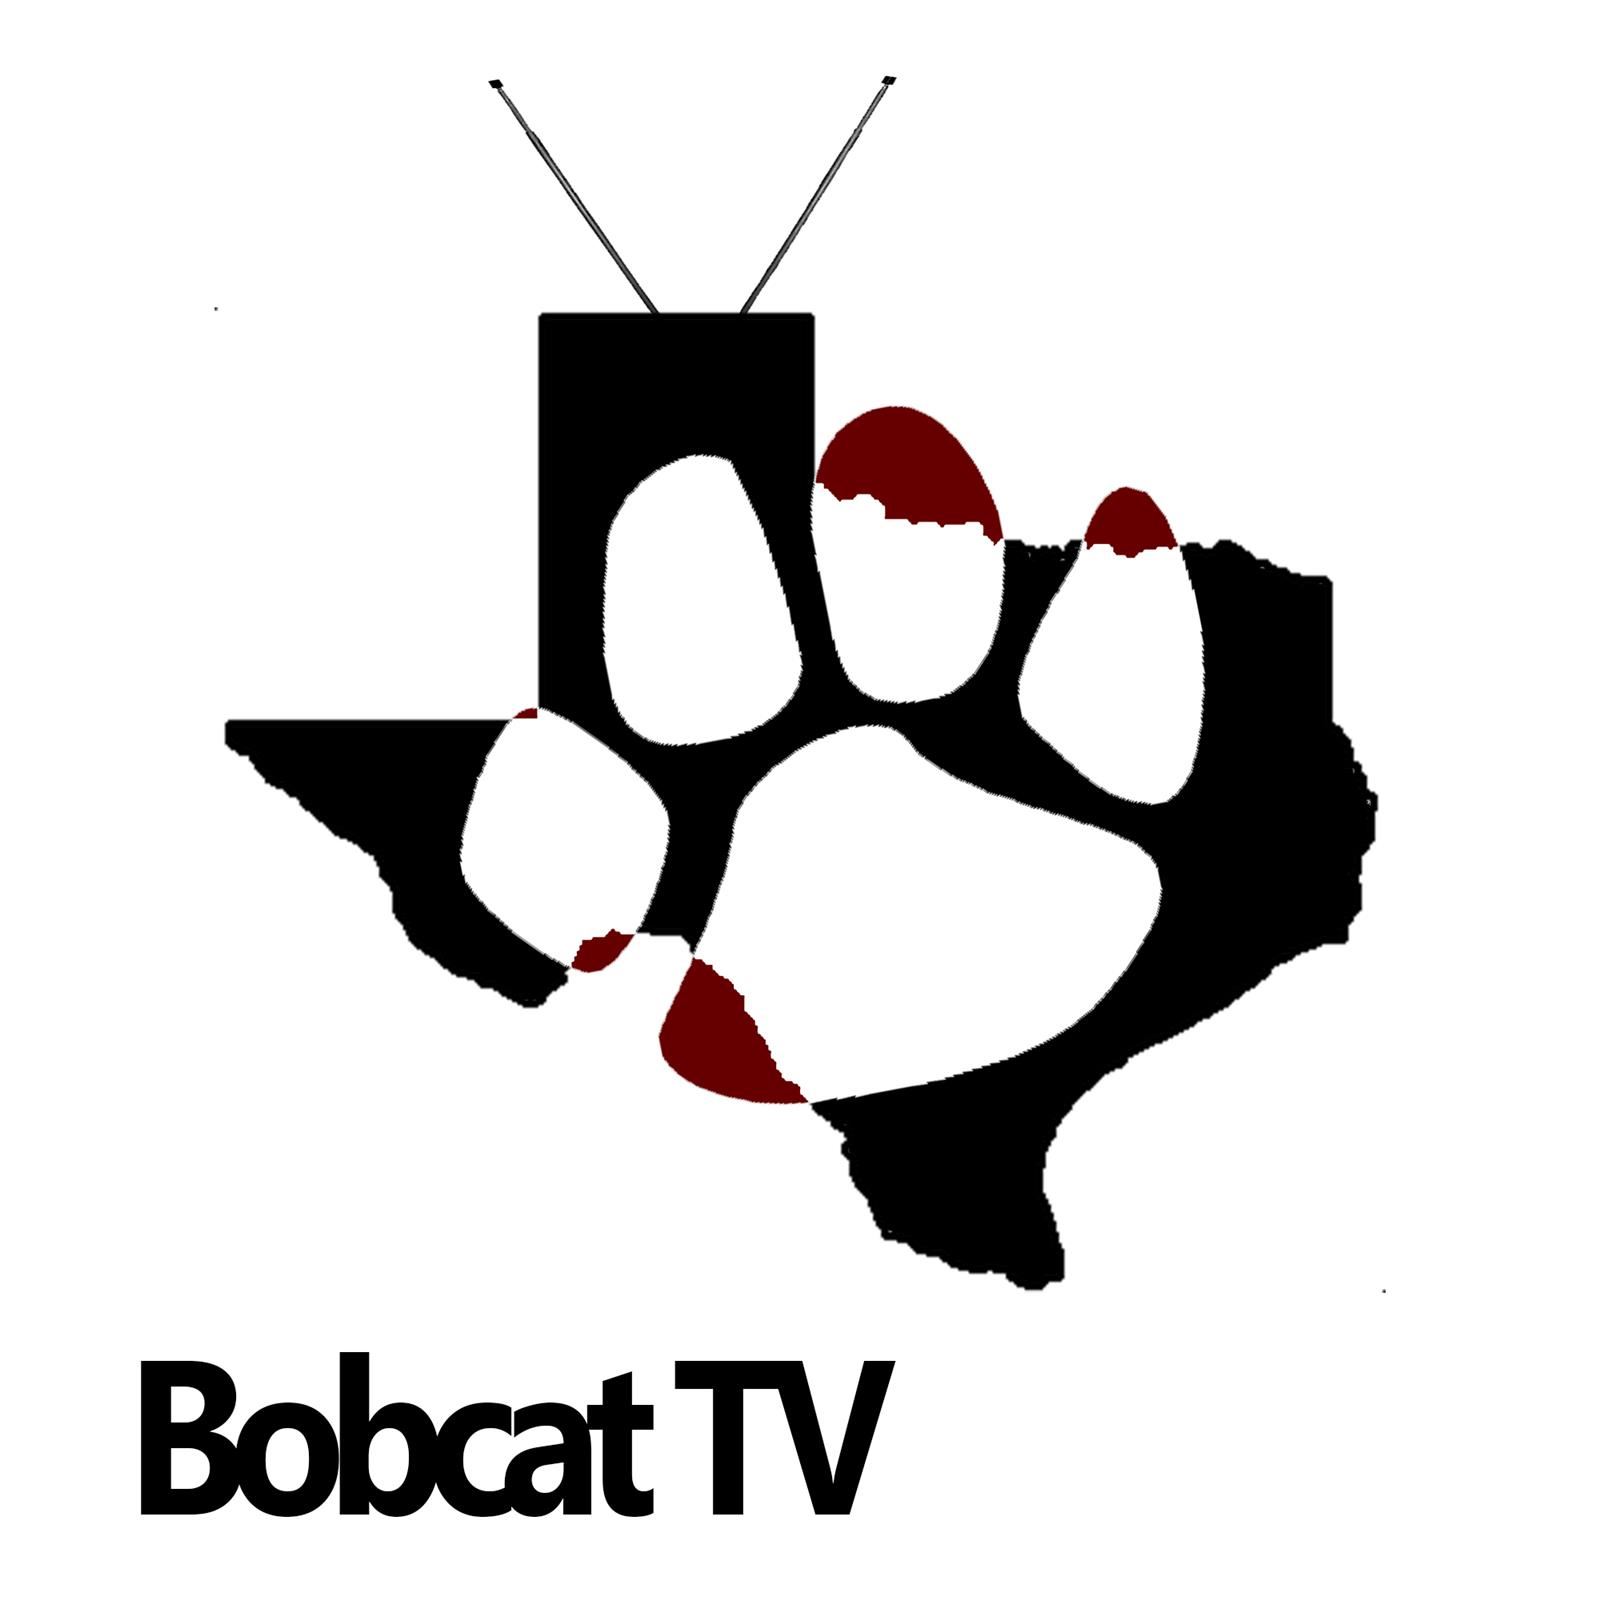 Bobcat TV